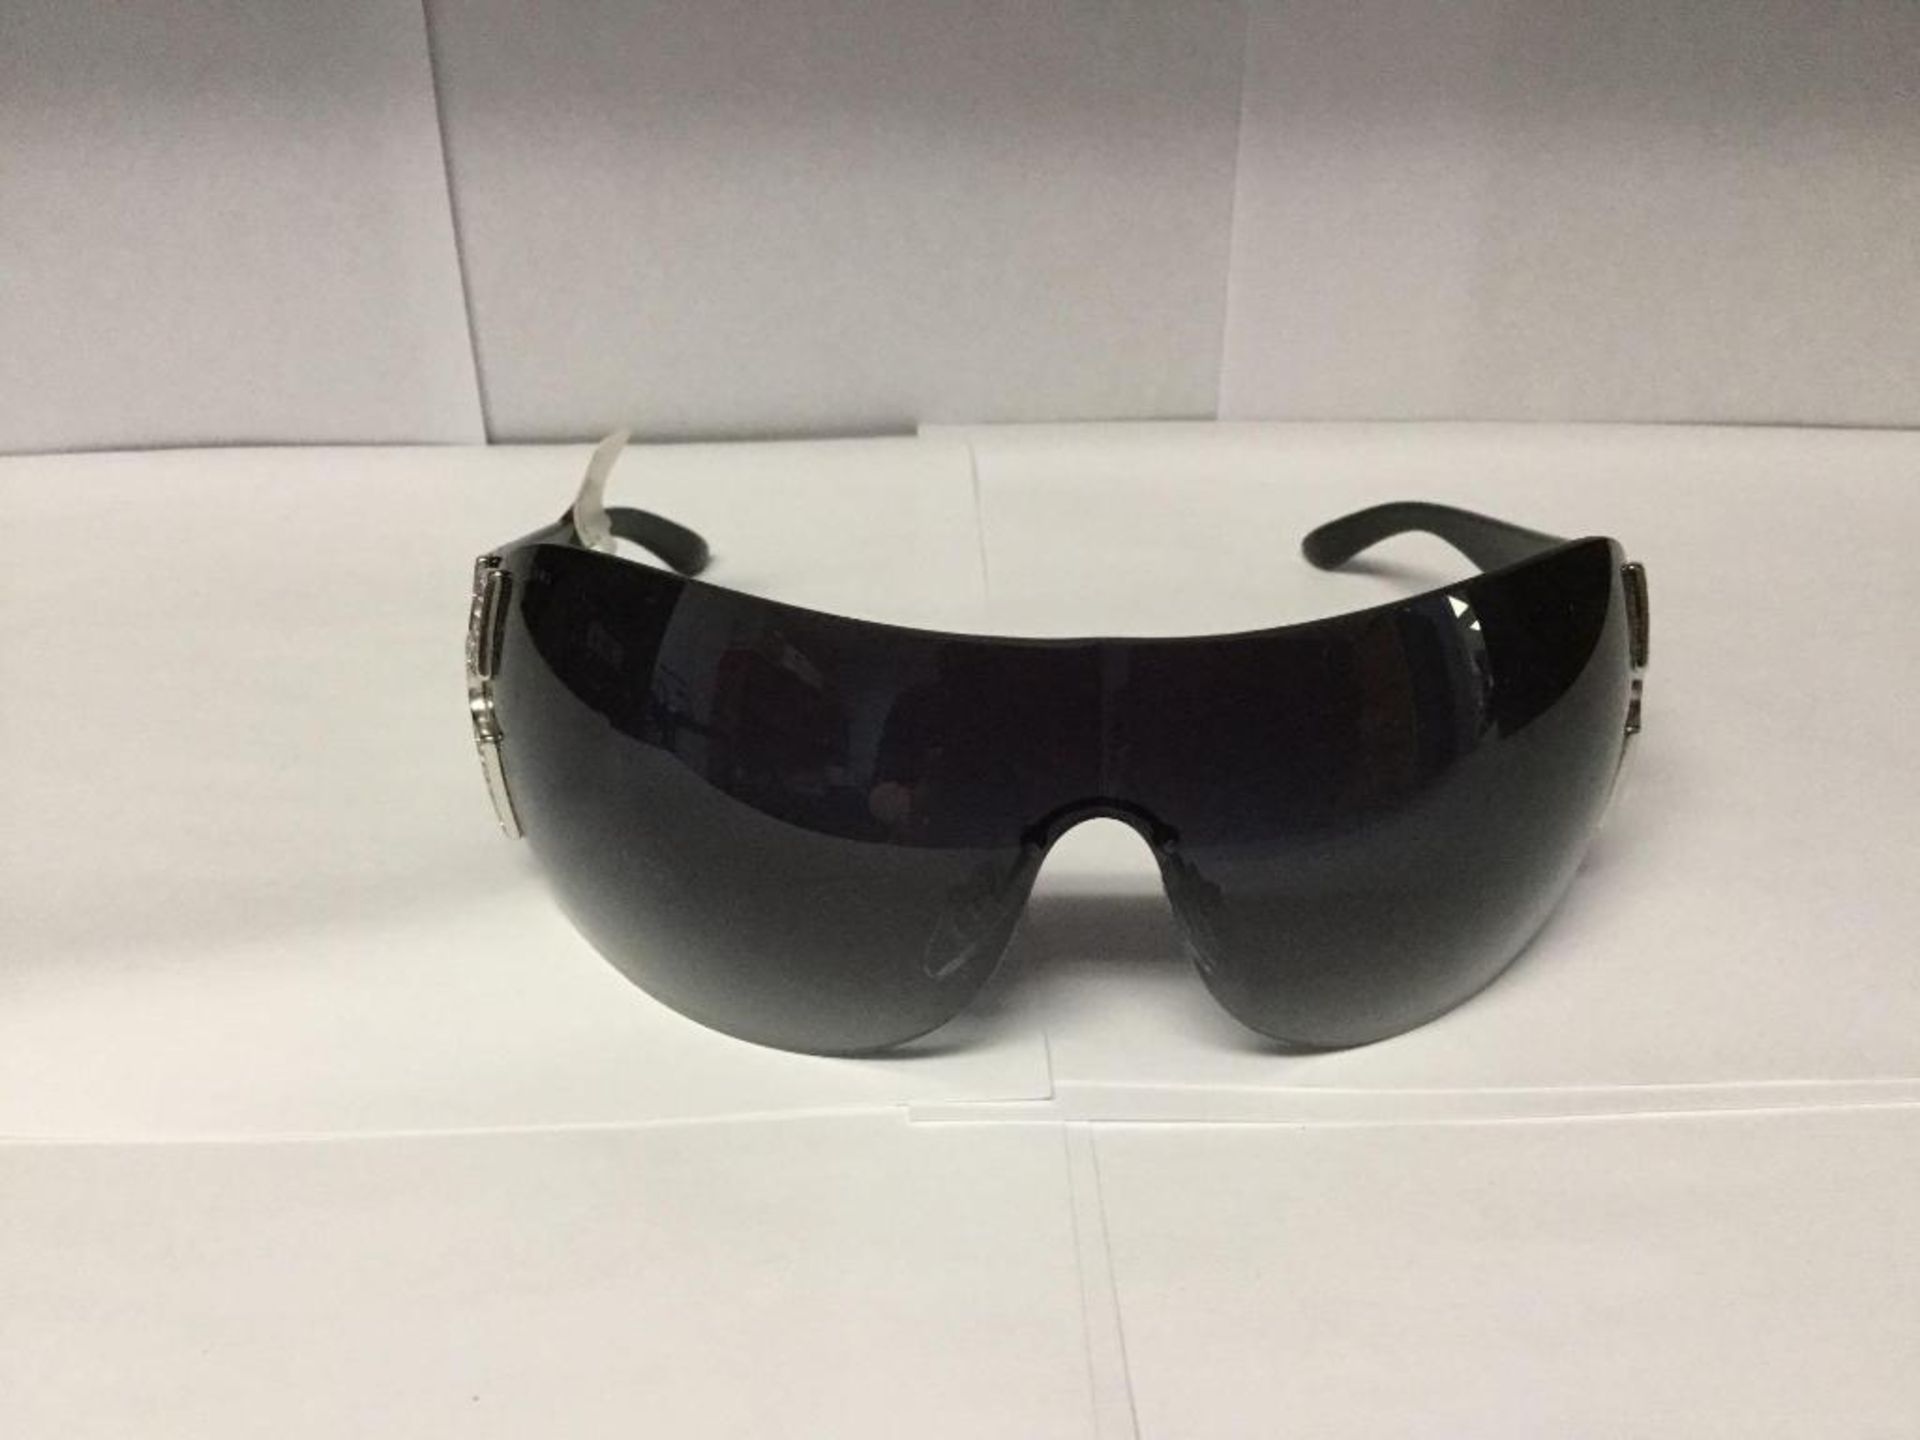 BVLGARI Sunglasses with Case - Value $ 430 - Image 3 of 3